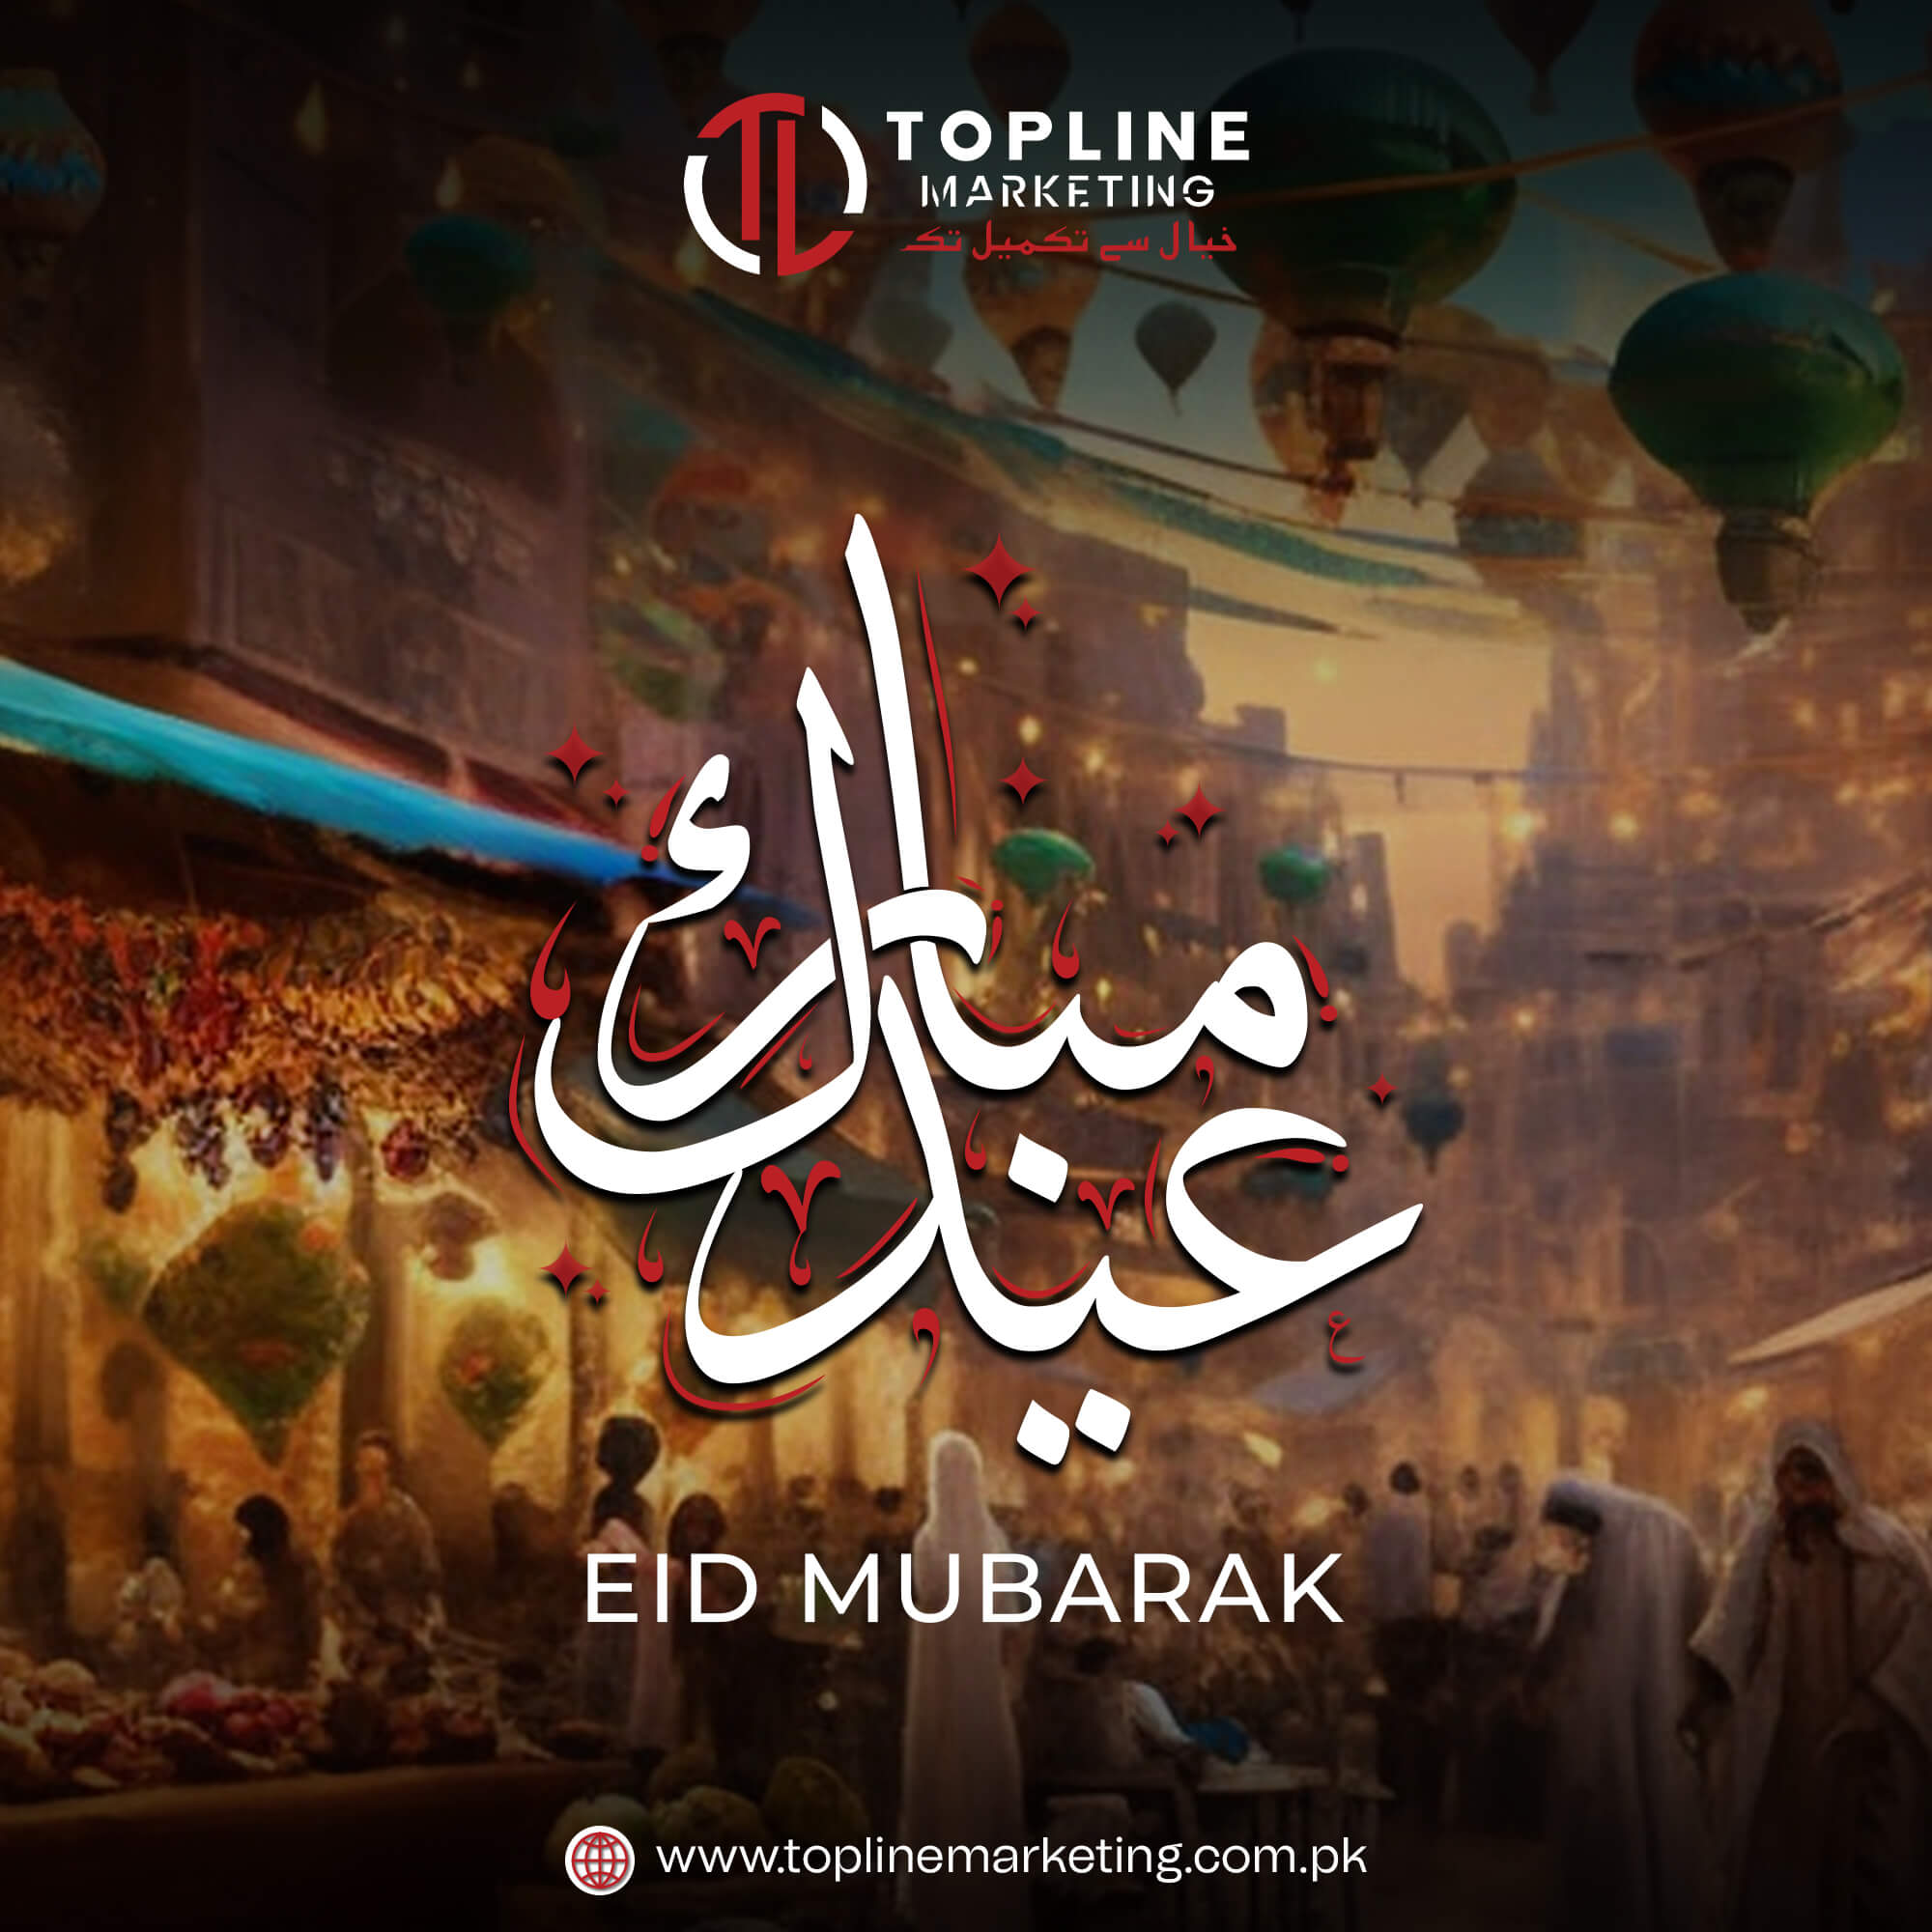 Topline Marketing Wish You Happy Eid Mubarak